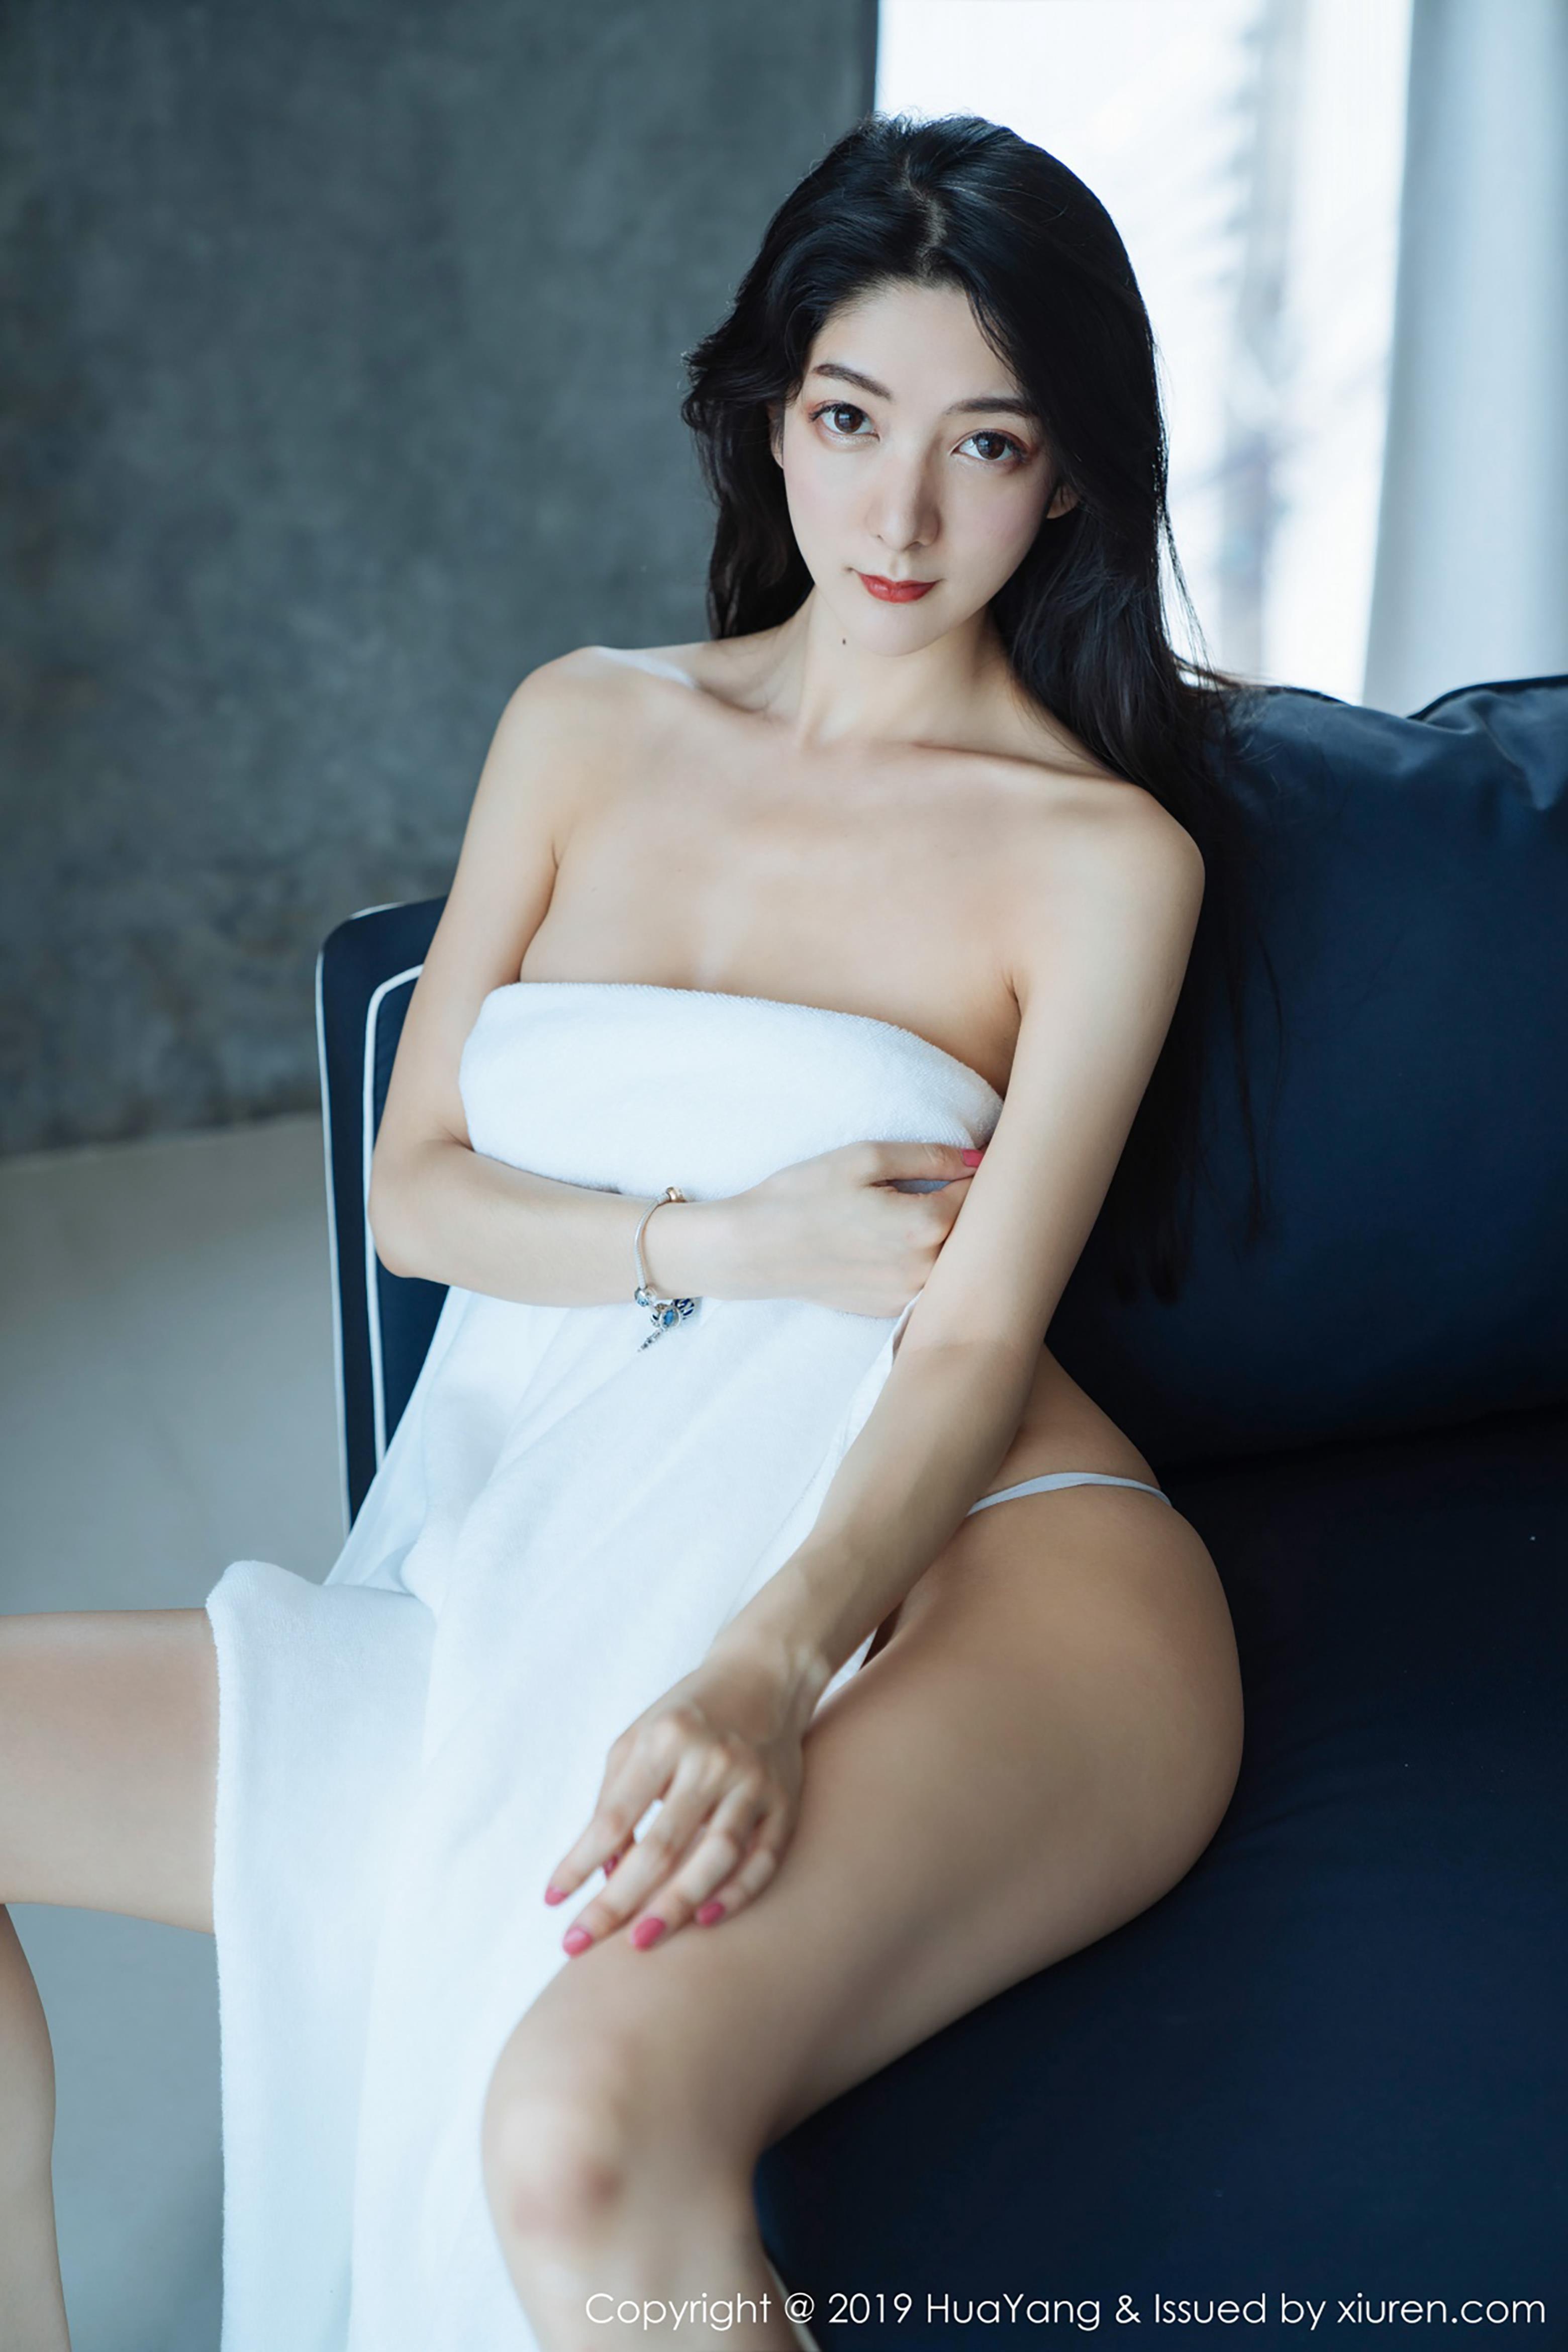 [HuaYang花漾show]HYG20190114VOL0108 Angela喜欢猫 白色浴袍与透视情趣内衣性感私房写真集,